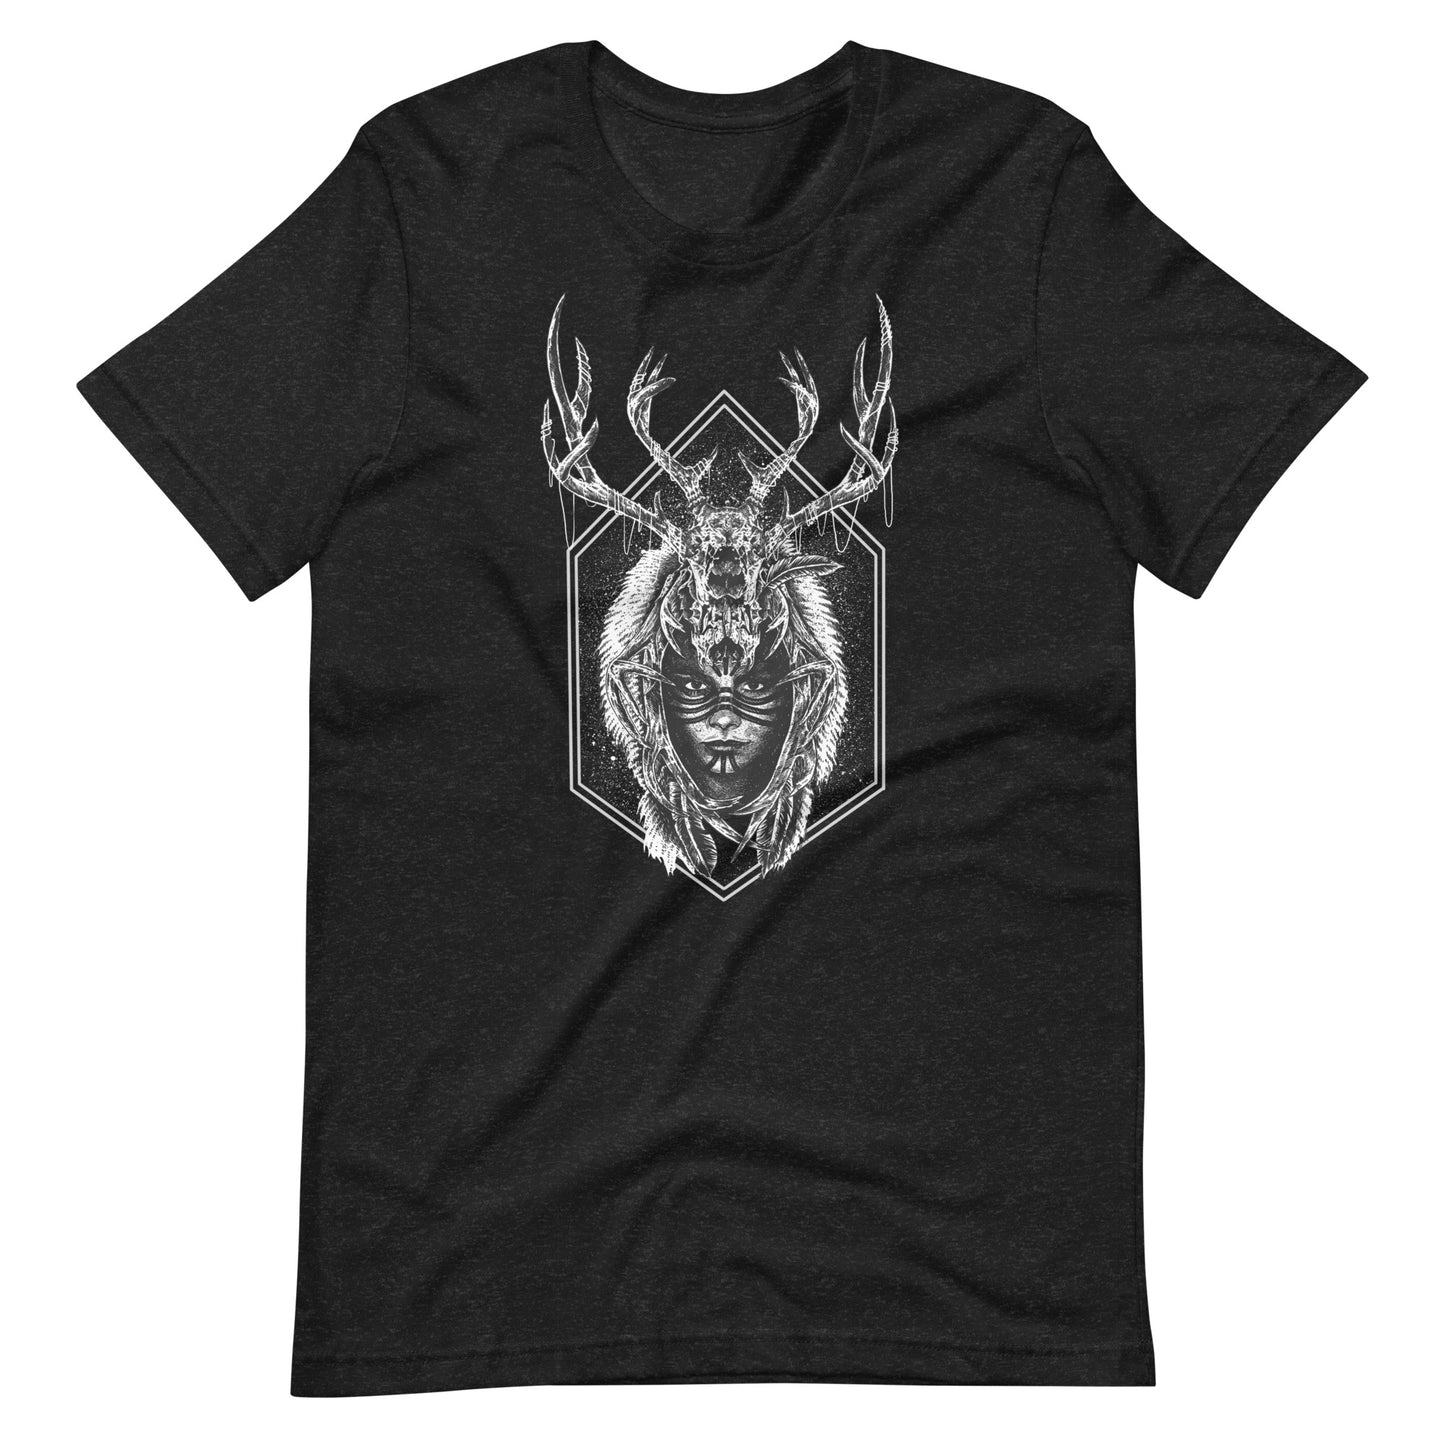 The Ruler - Men's t-shirt - Black Heather Front